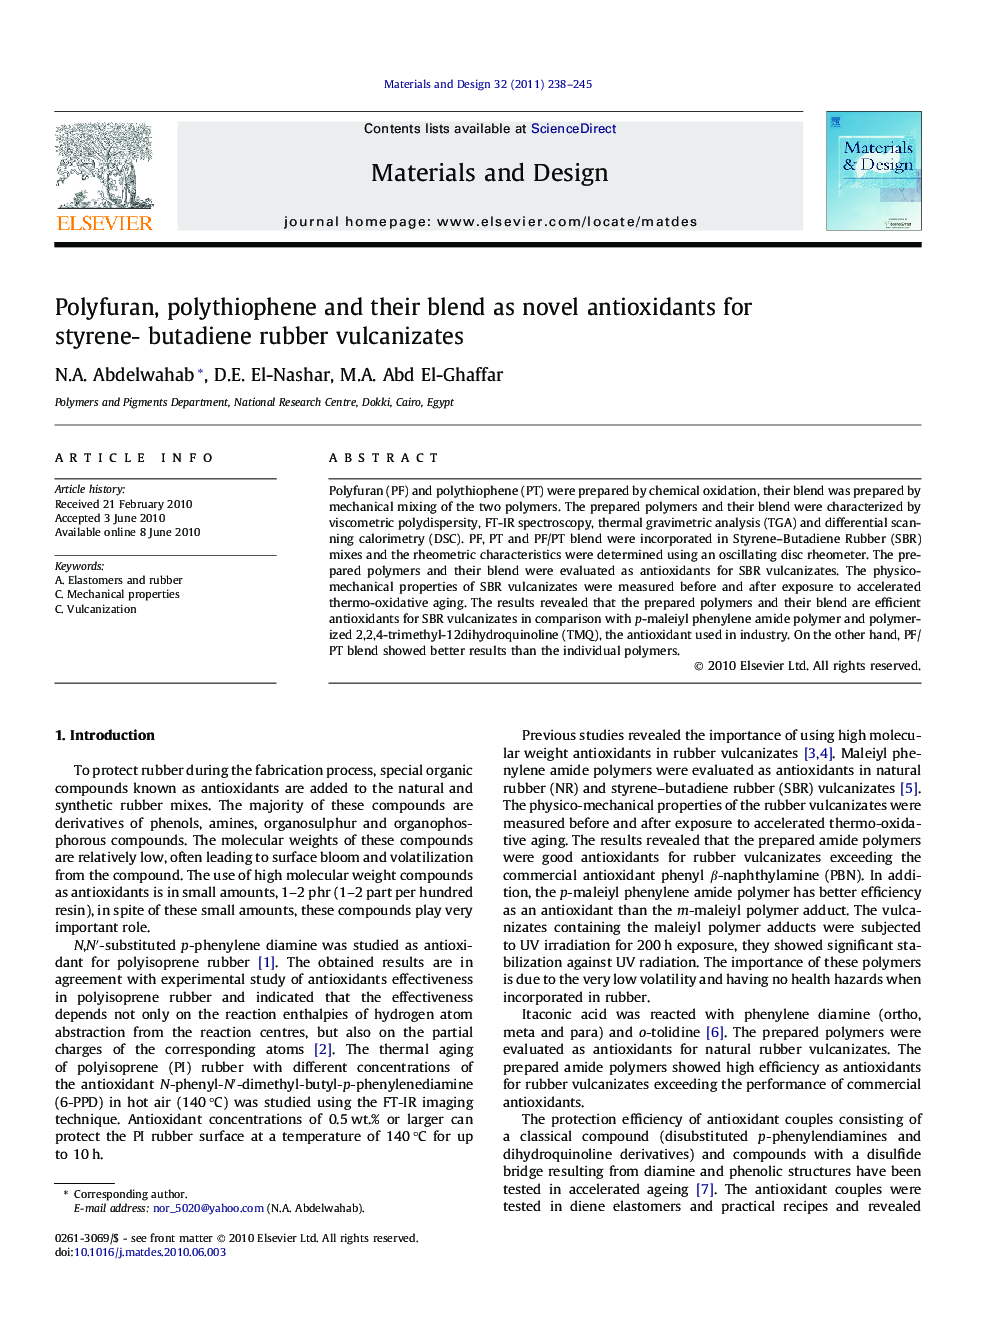 Polyfuran, polythiophene and their blend as novel antioxidants for styrene- butadiene rubber vulcanizates